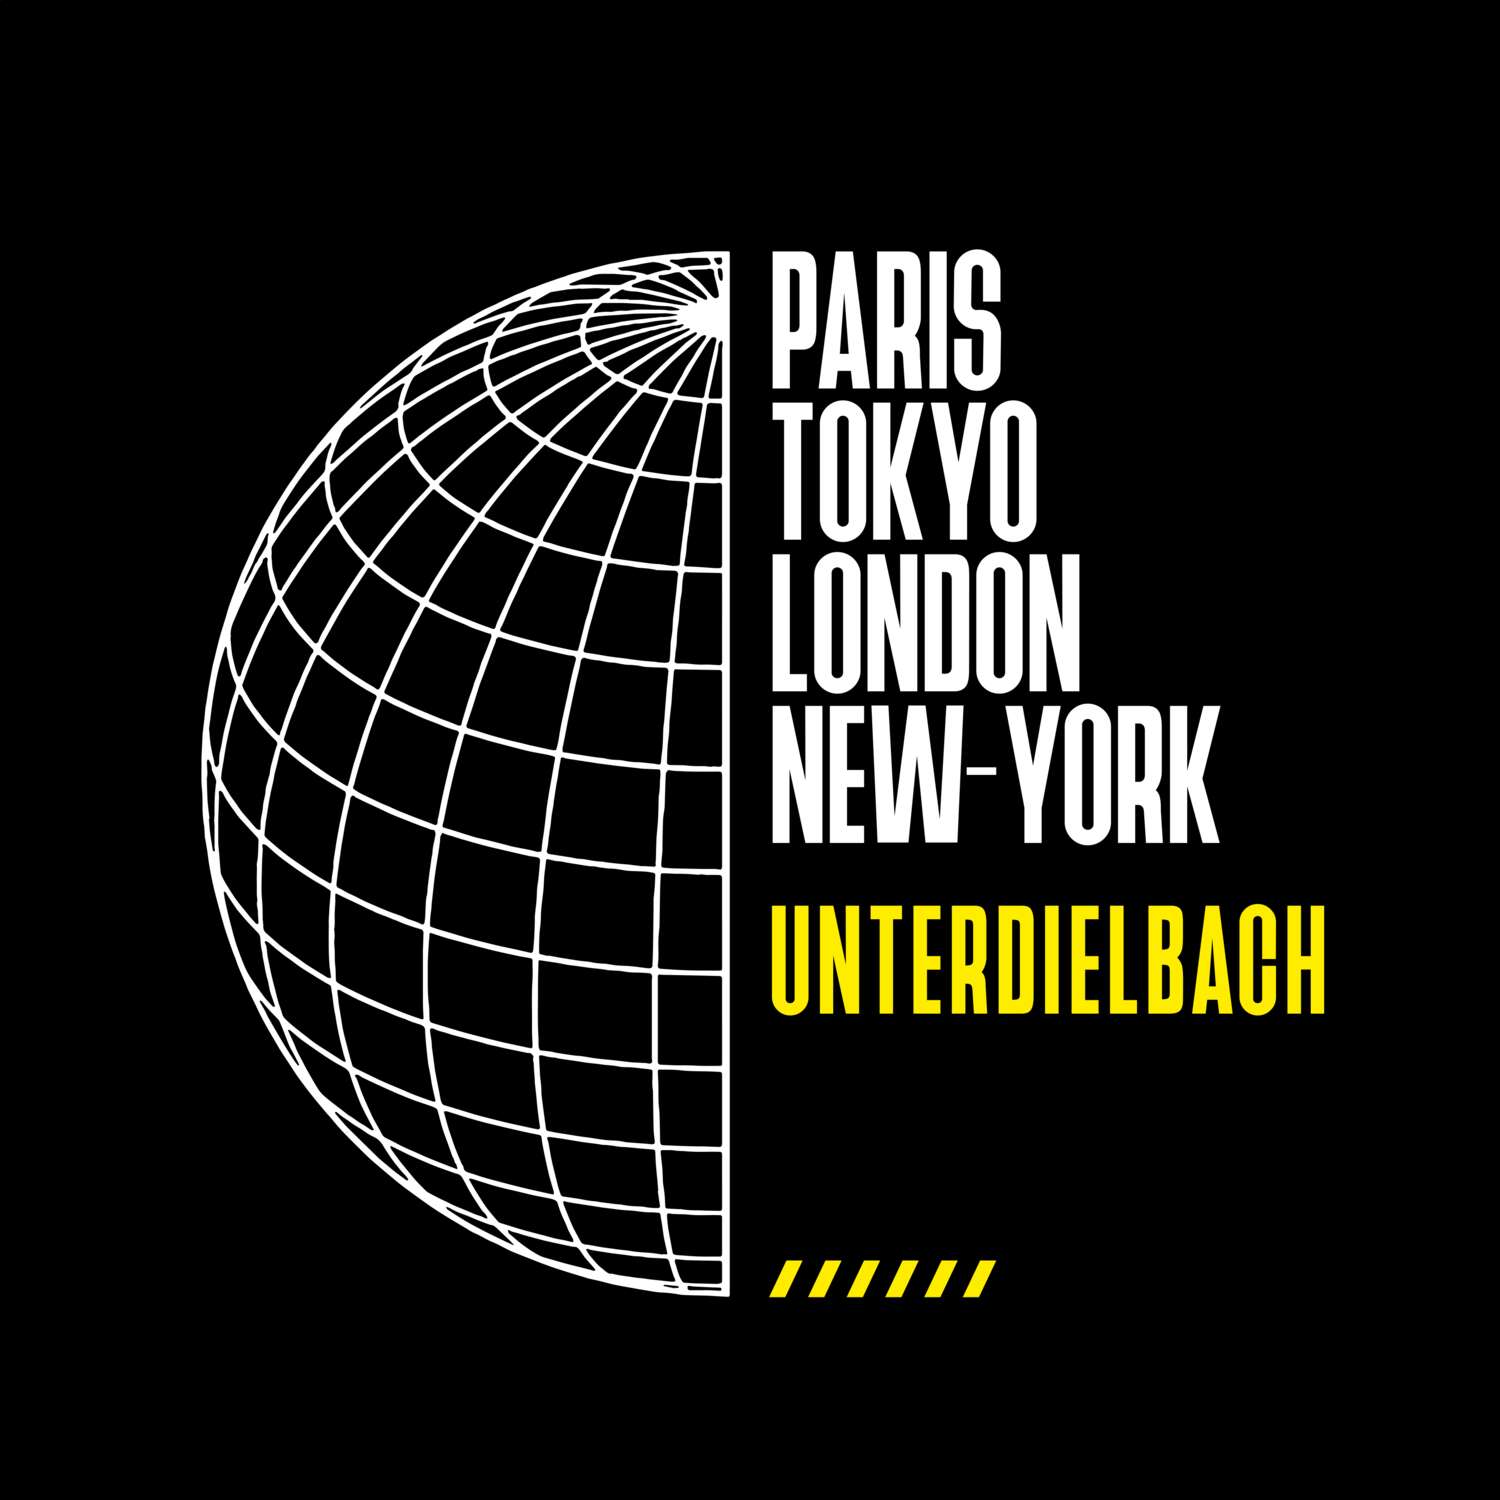 Unterdielbach T-Shirt »Paris Tokyo London«